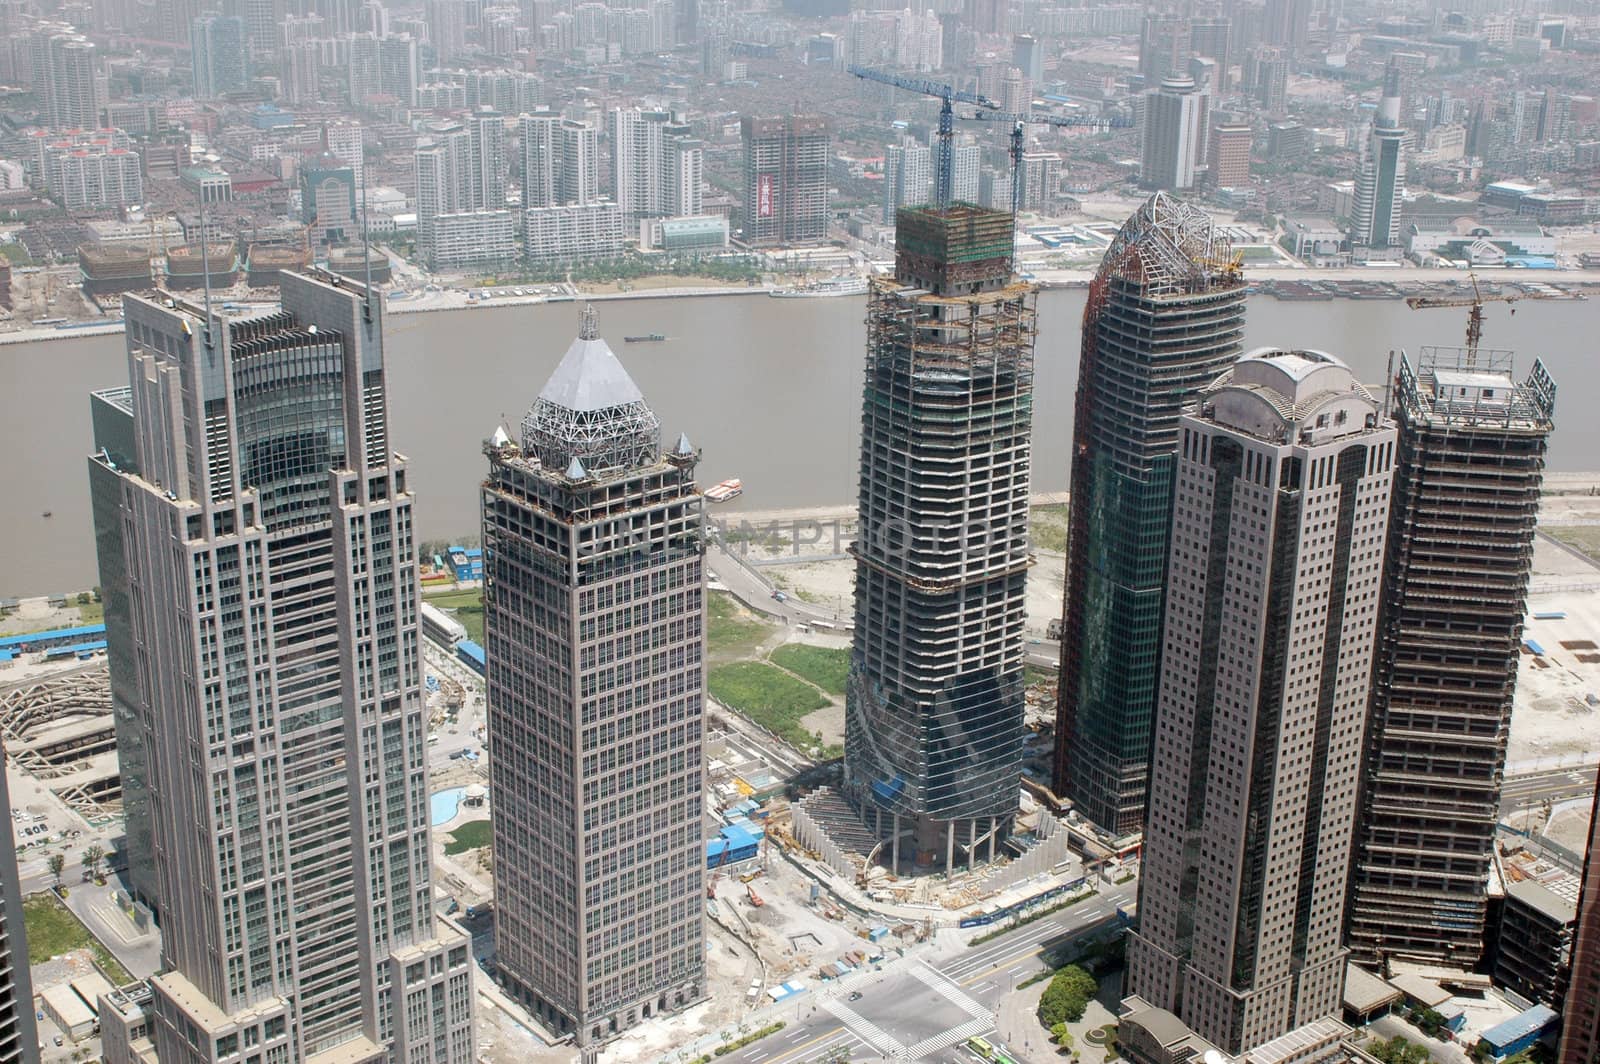 Skyscrapers in Shanghai by bartekchiny